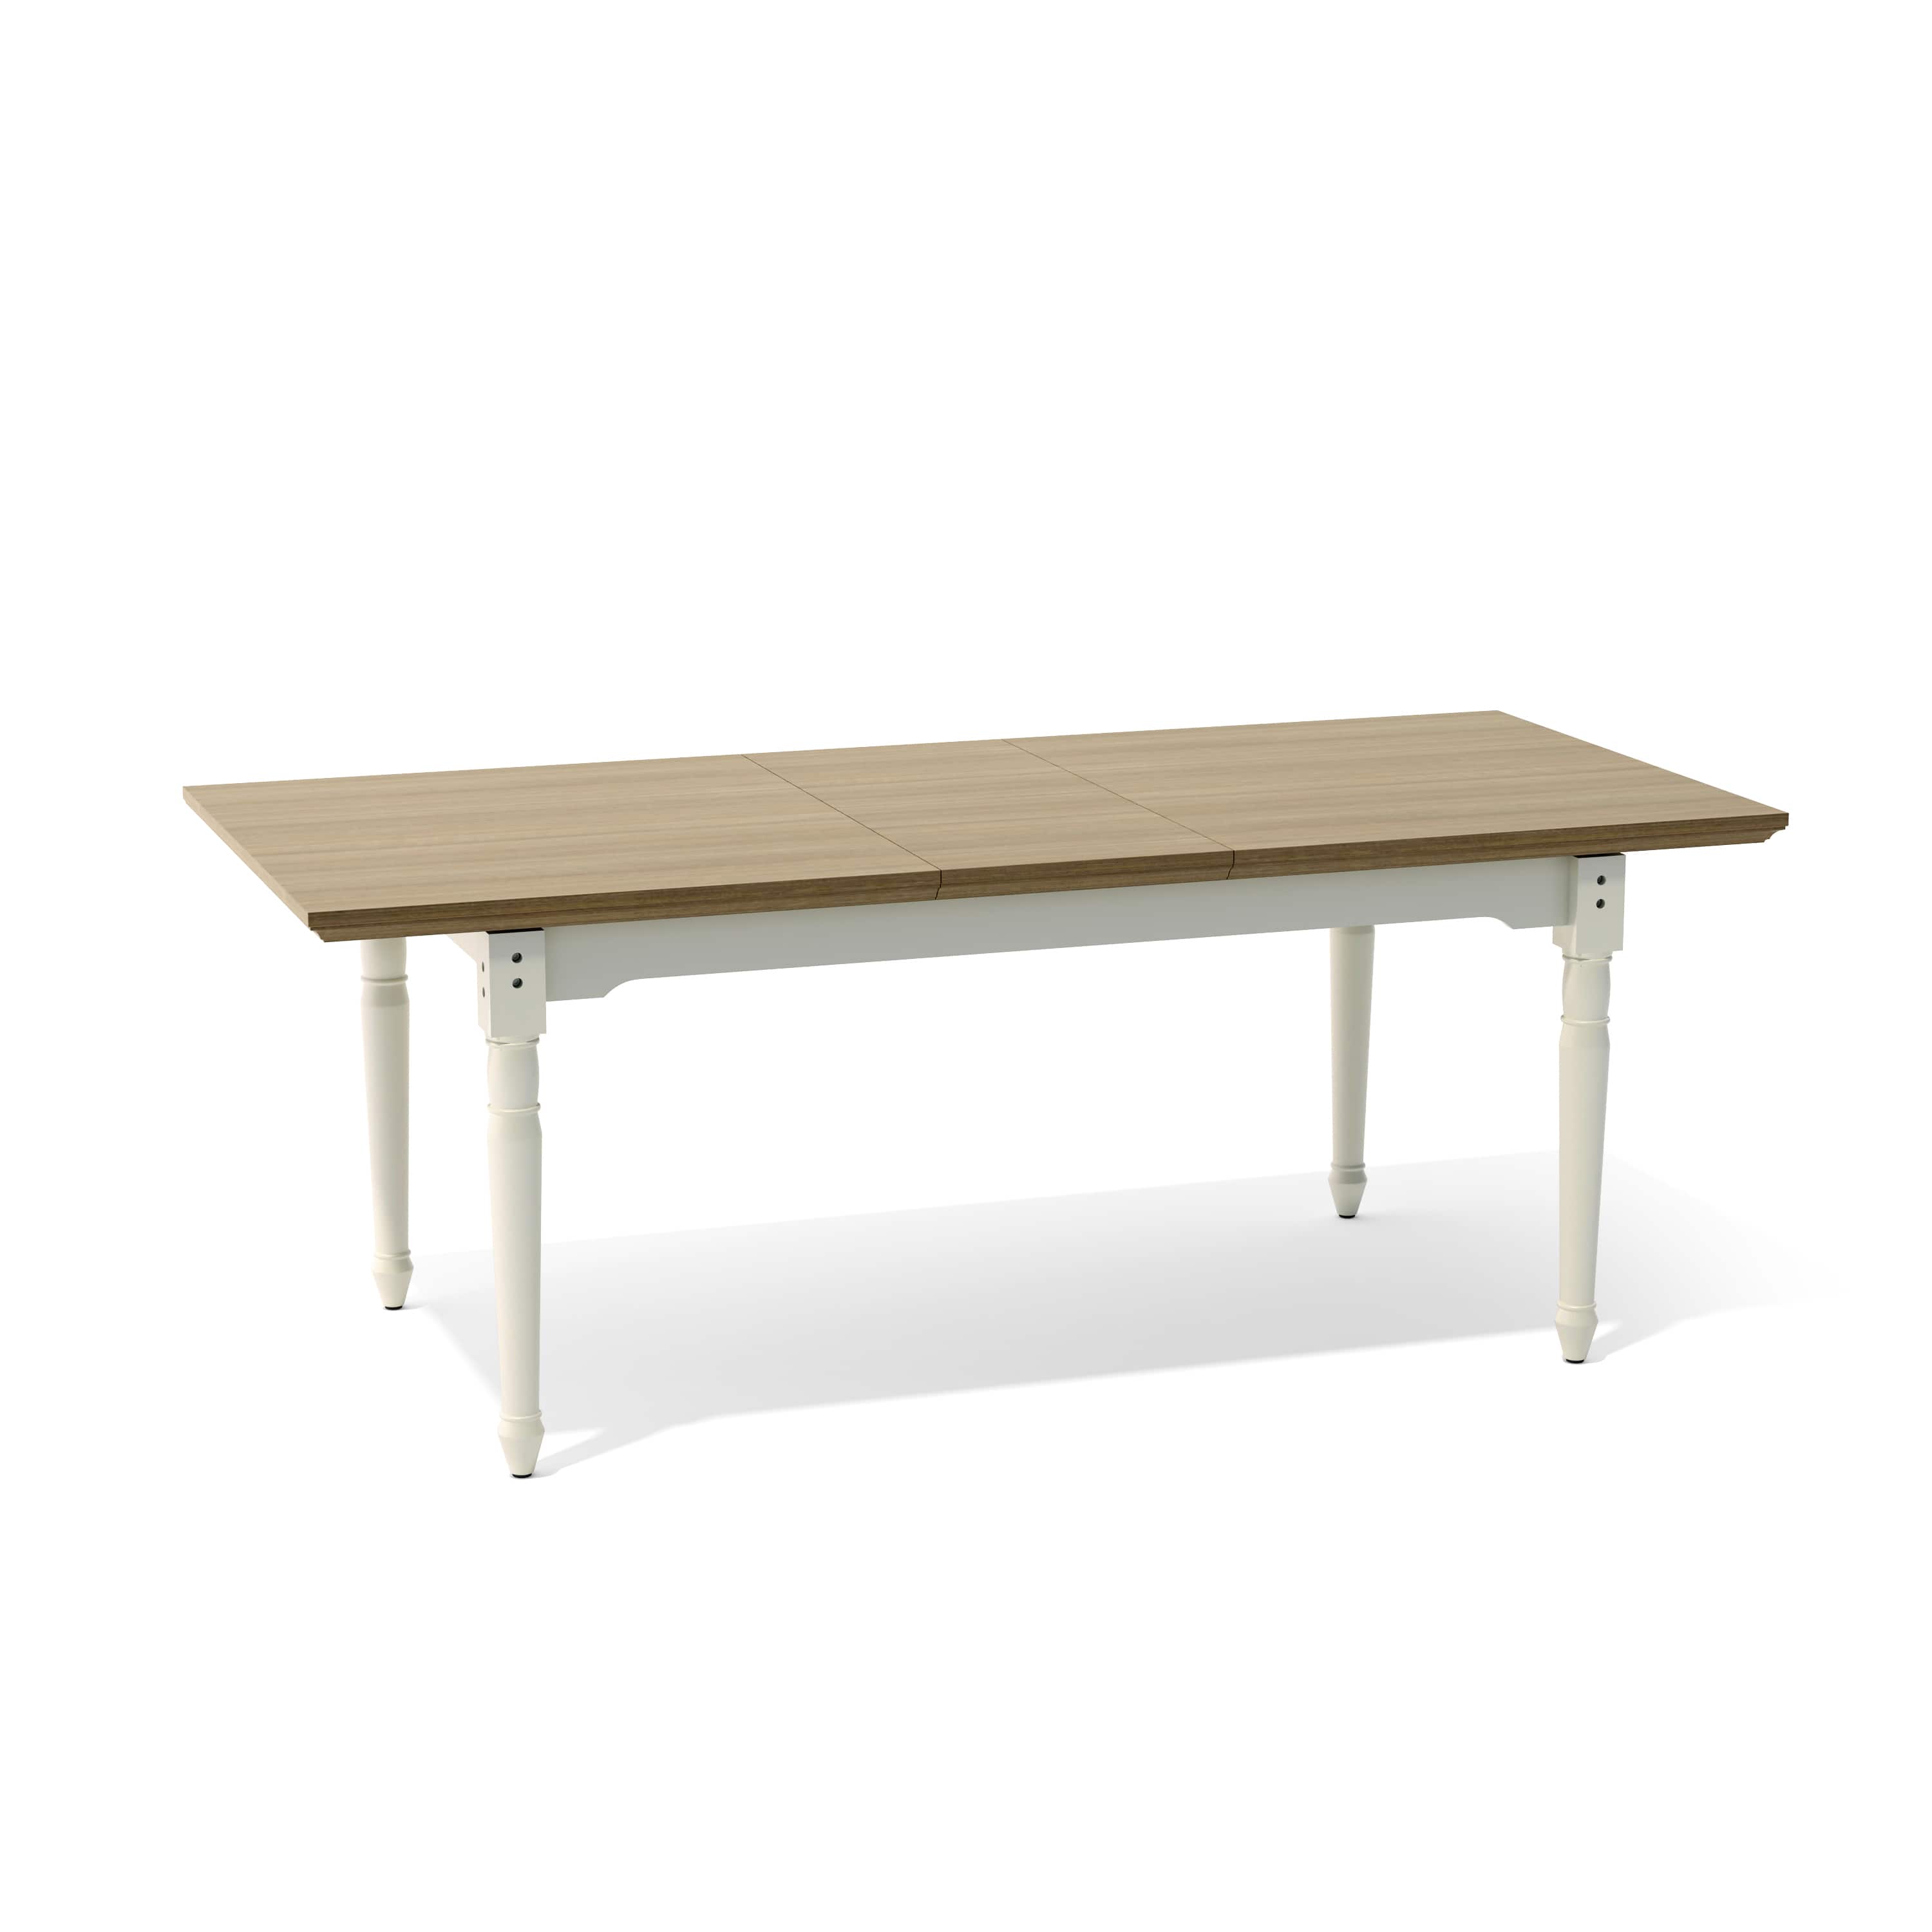 Anderson teak extendable table 